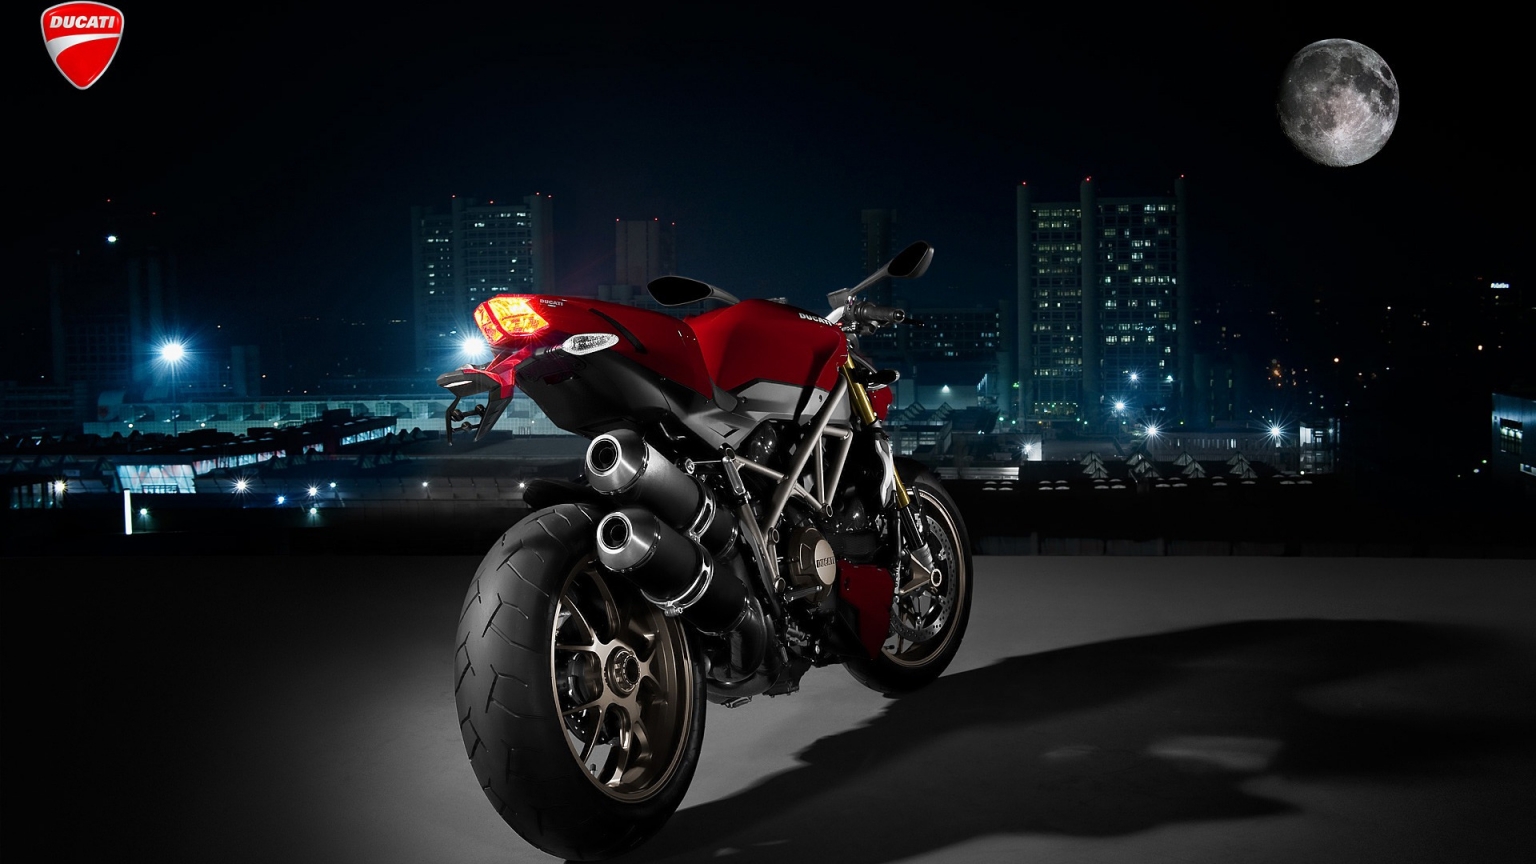 Ducati Super Sport Rear Angle for 1536 x 864 HDTV resolution